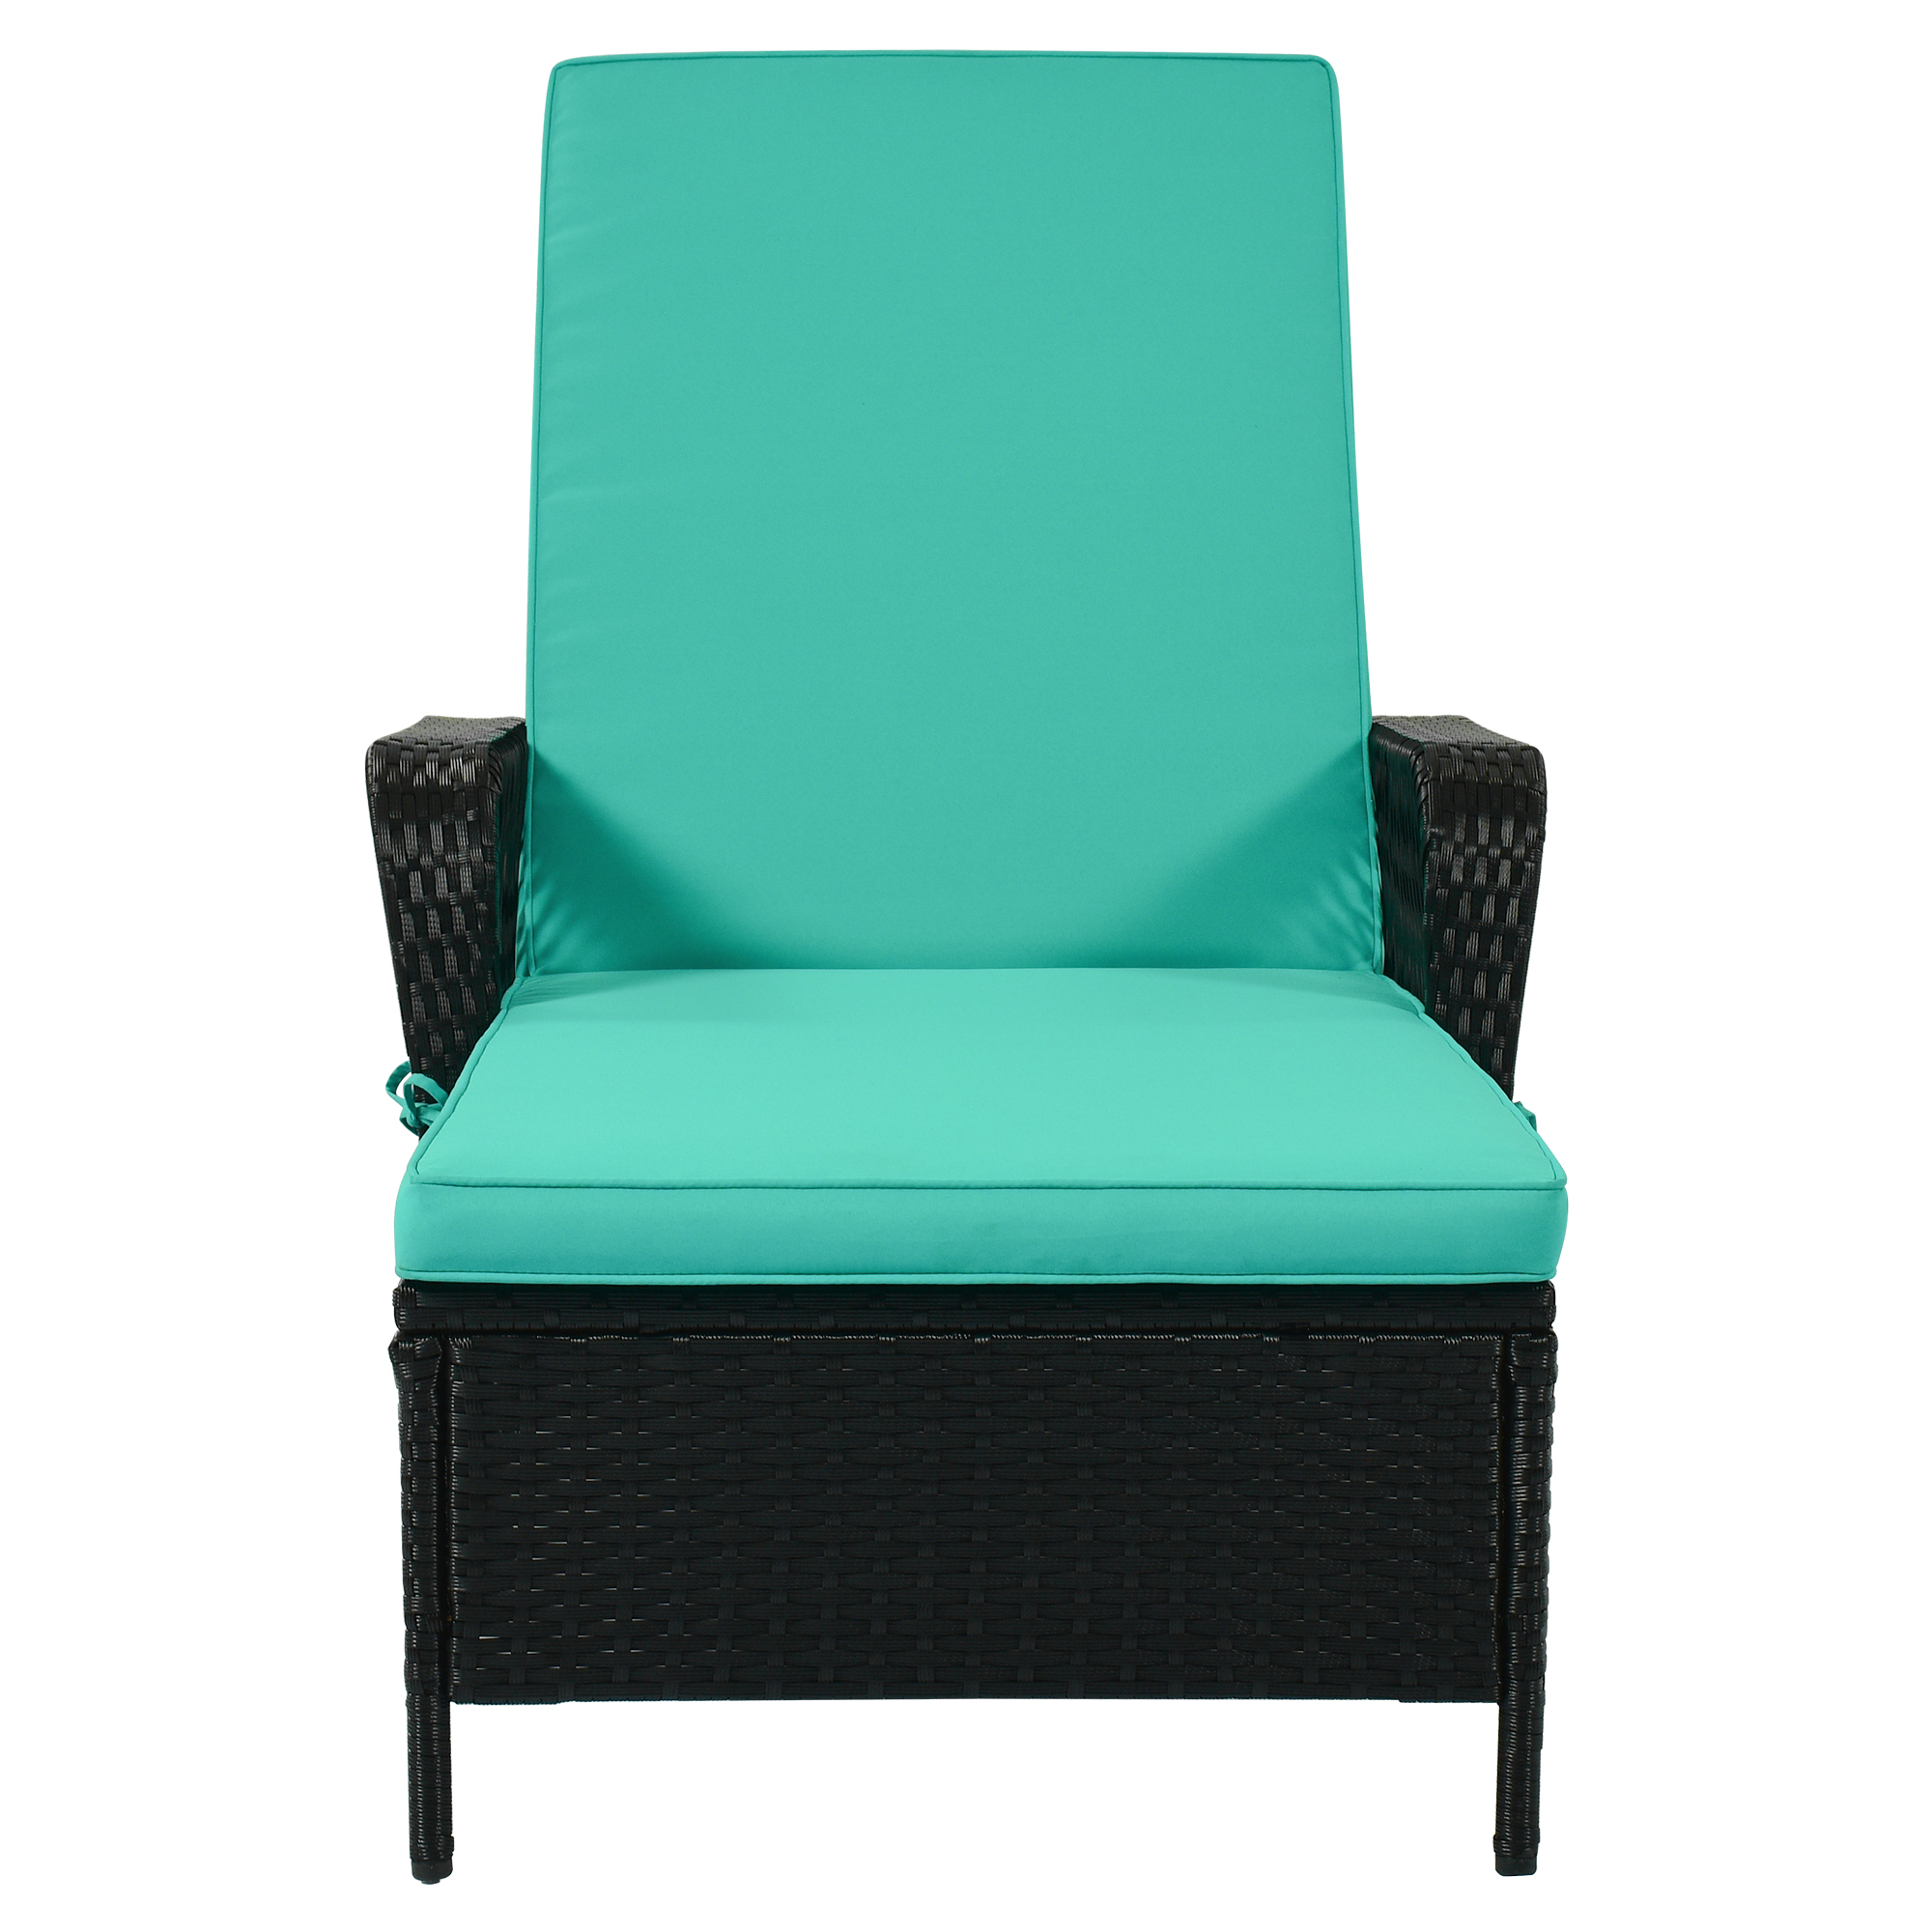 Sesslife Adjustable Outdoor Steel Patio Chaise Lounge Chair with 6 Positions, Chaise Lounge Chair for Poolside Backyard, UV-Resistant PE Rattan Wicker Chaise Lounge Chair with Green Cushion - image 2 of 9